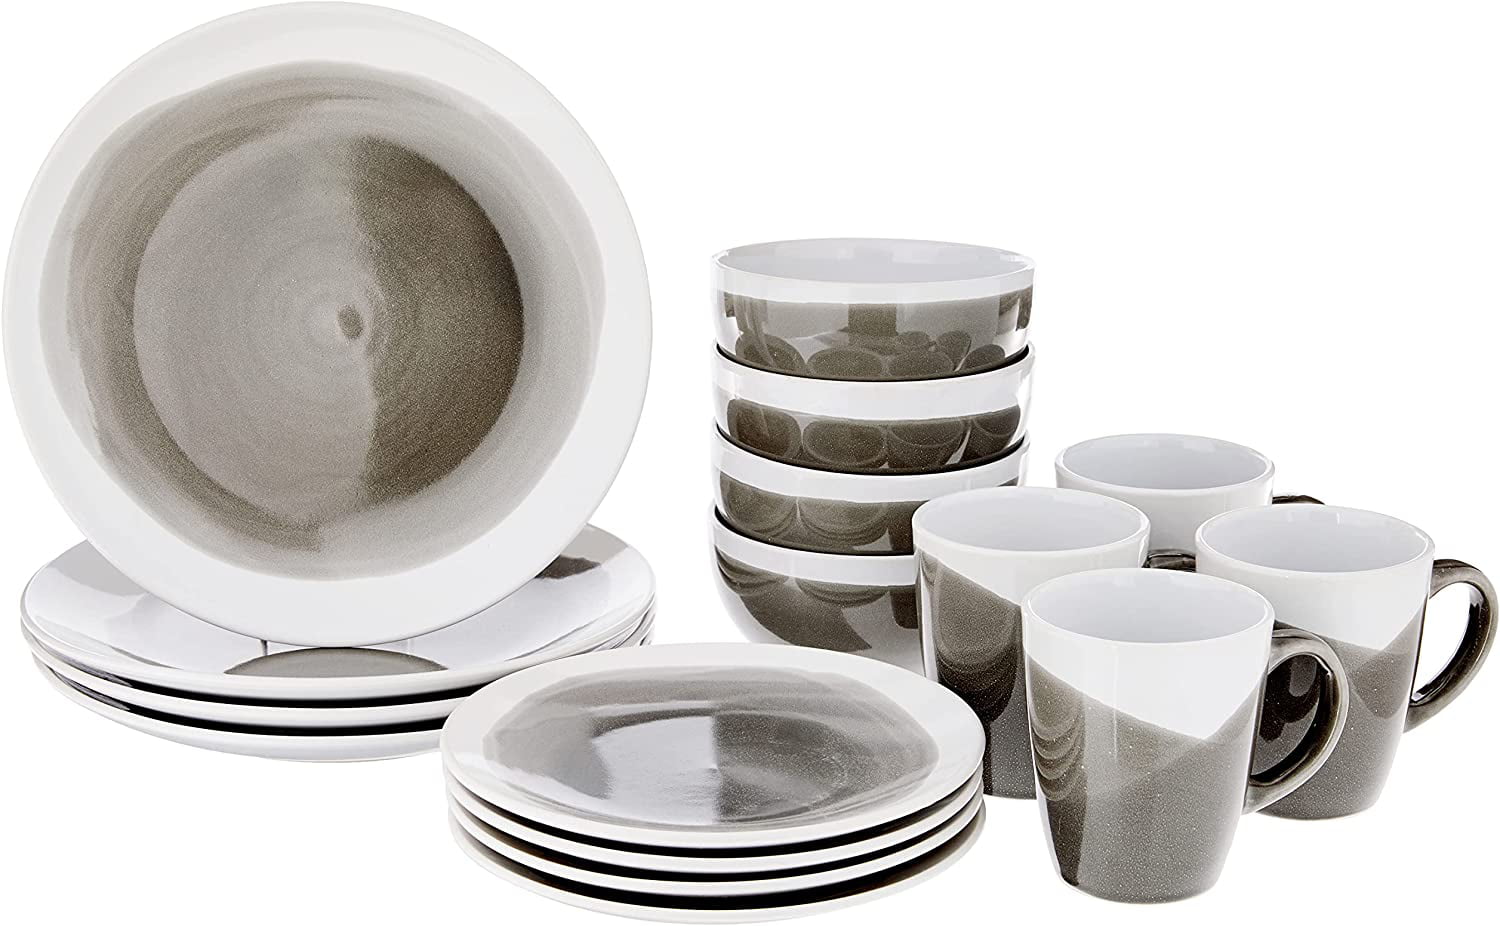 Microwave and Dishwasher Safe Ceramic Bowls and Plates Set Service for 4 Bosmarlin Stoneware Dinnerware Set Reactive Glaze Grayish Green 12 Piece 